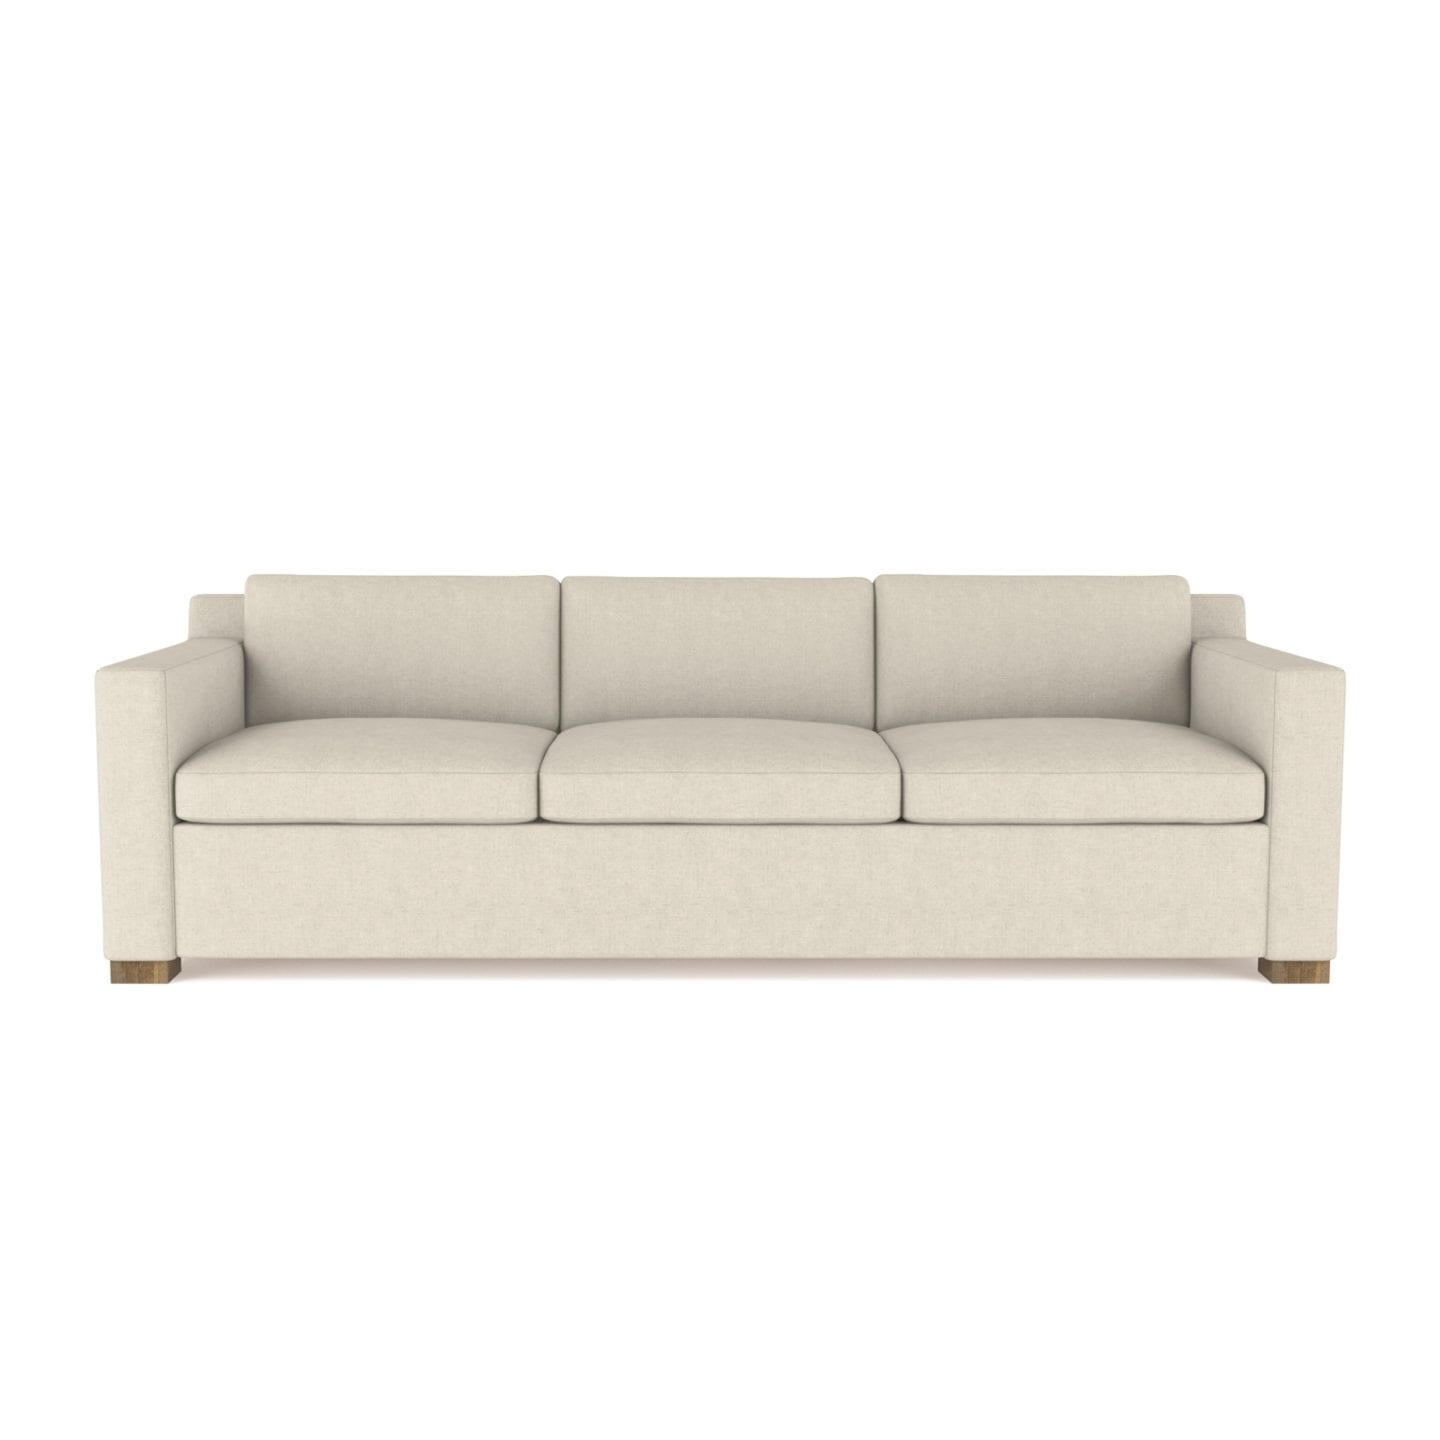 White transitional style sofa. 